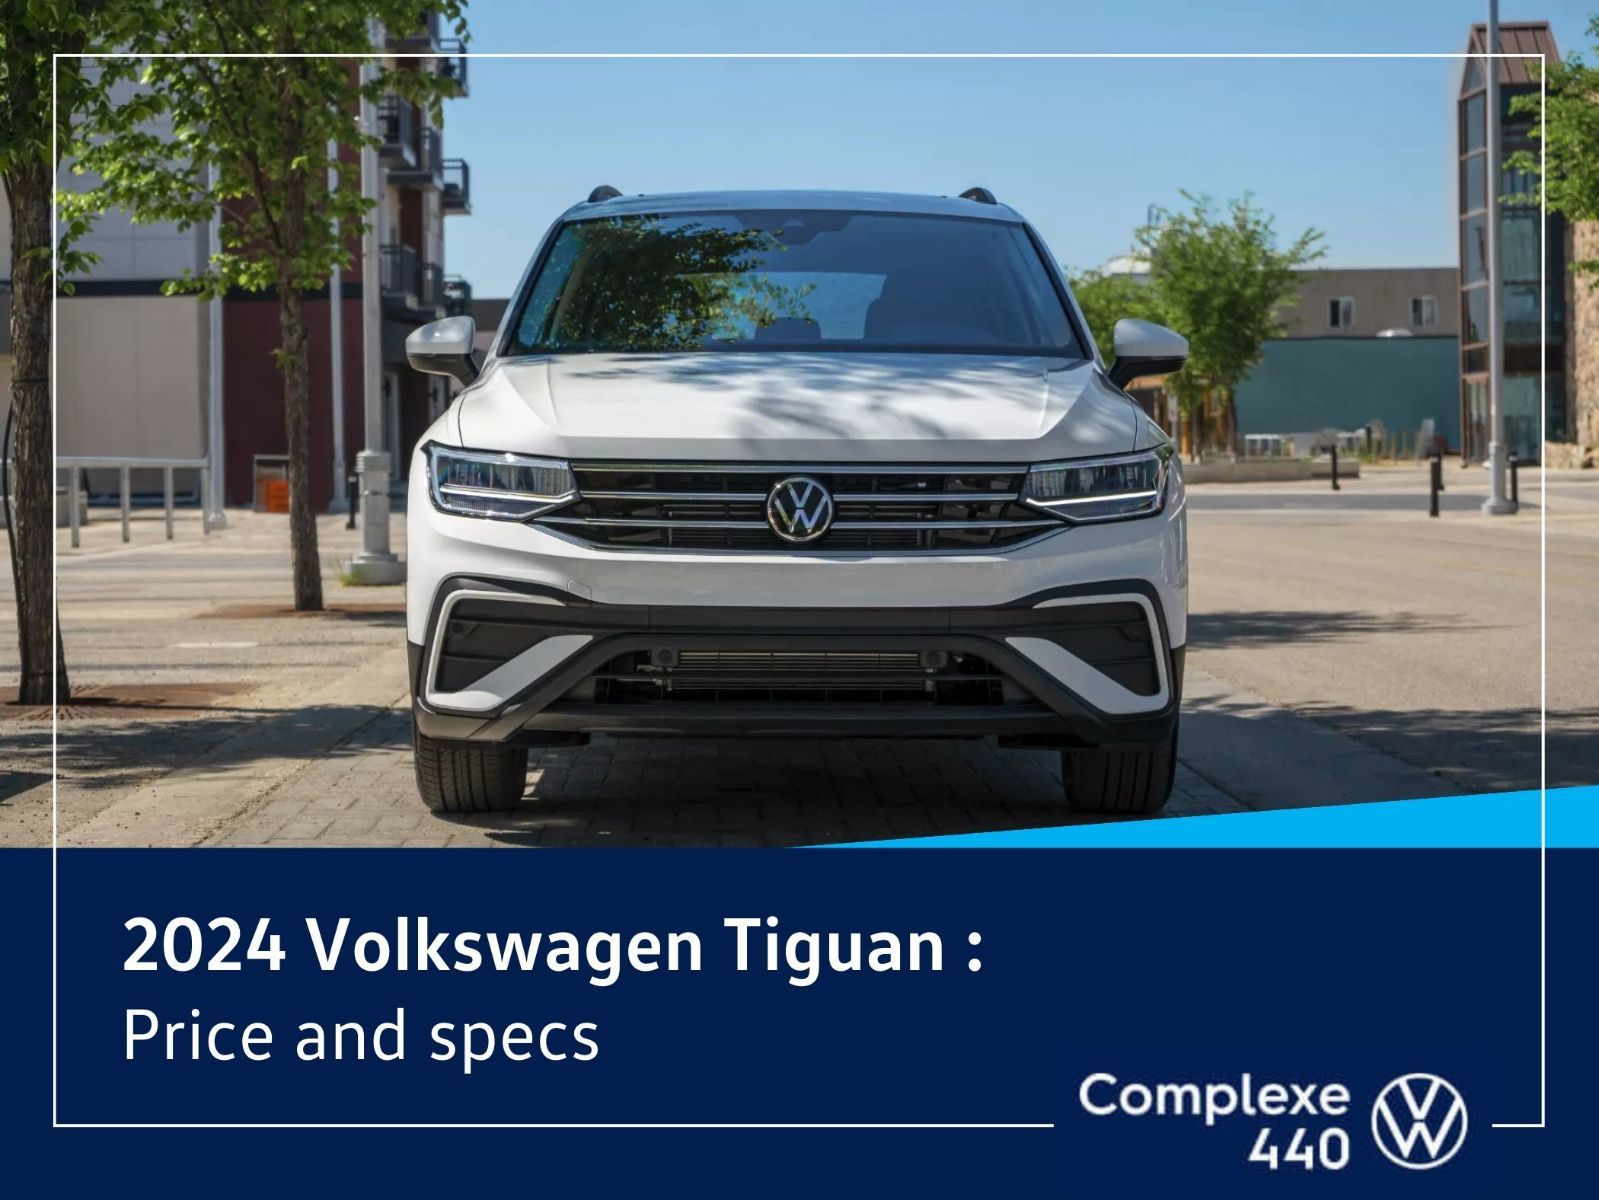 header image - VW Tiguan 2024 Price and specs